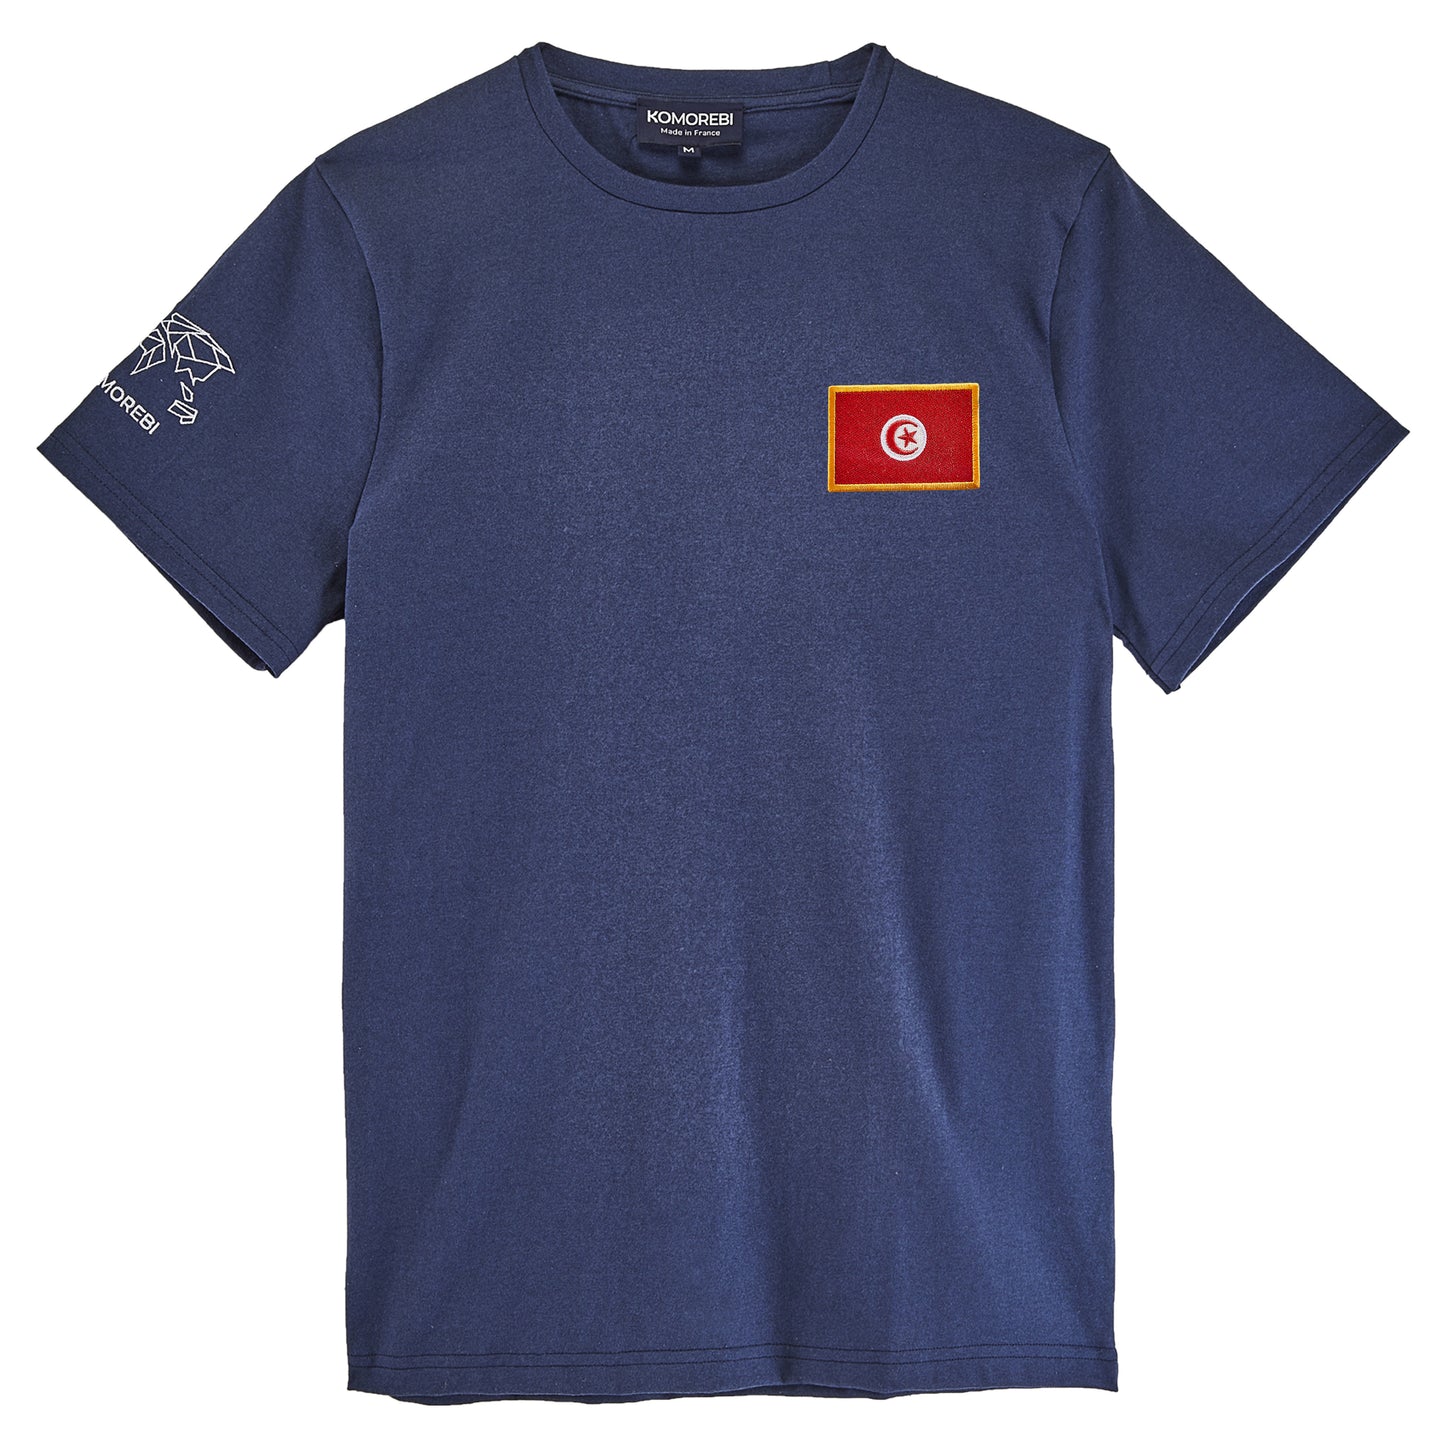 Tunisia - flag t-shirt